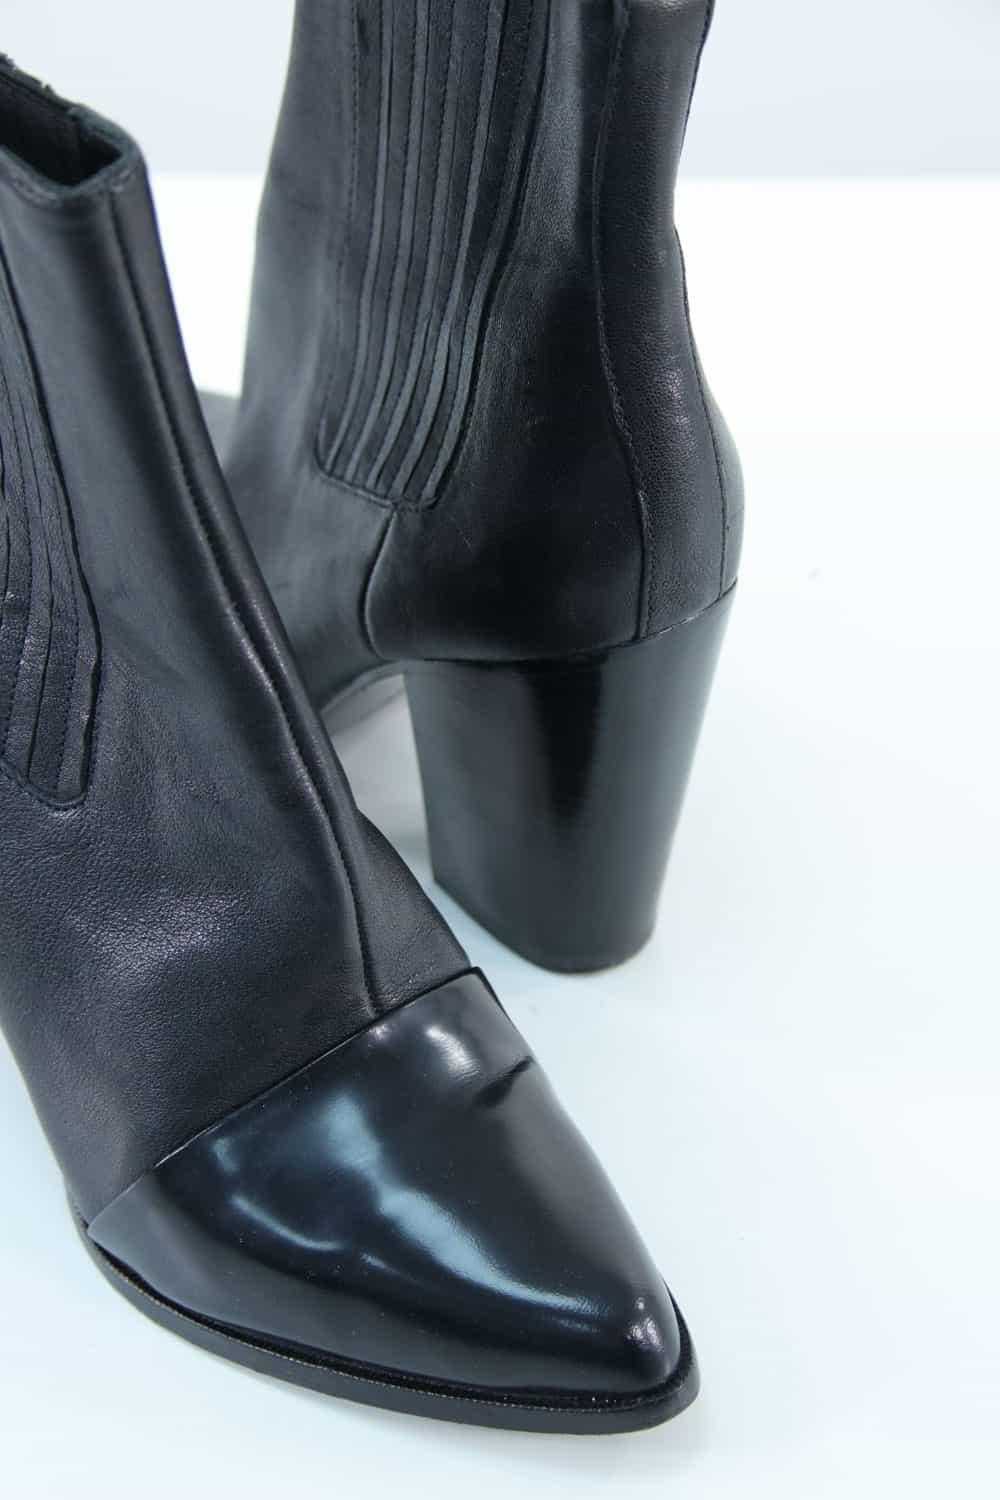 Circular Clothing Boots Kenzo noir cuir. Talon 9.… - image 4